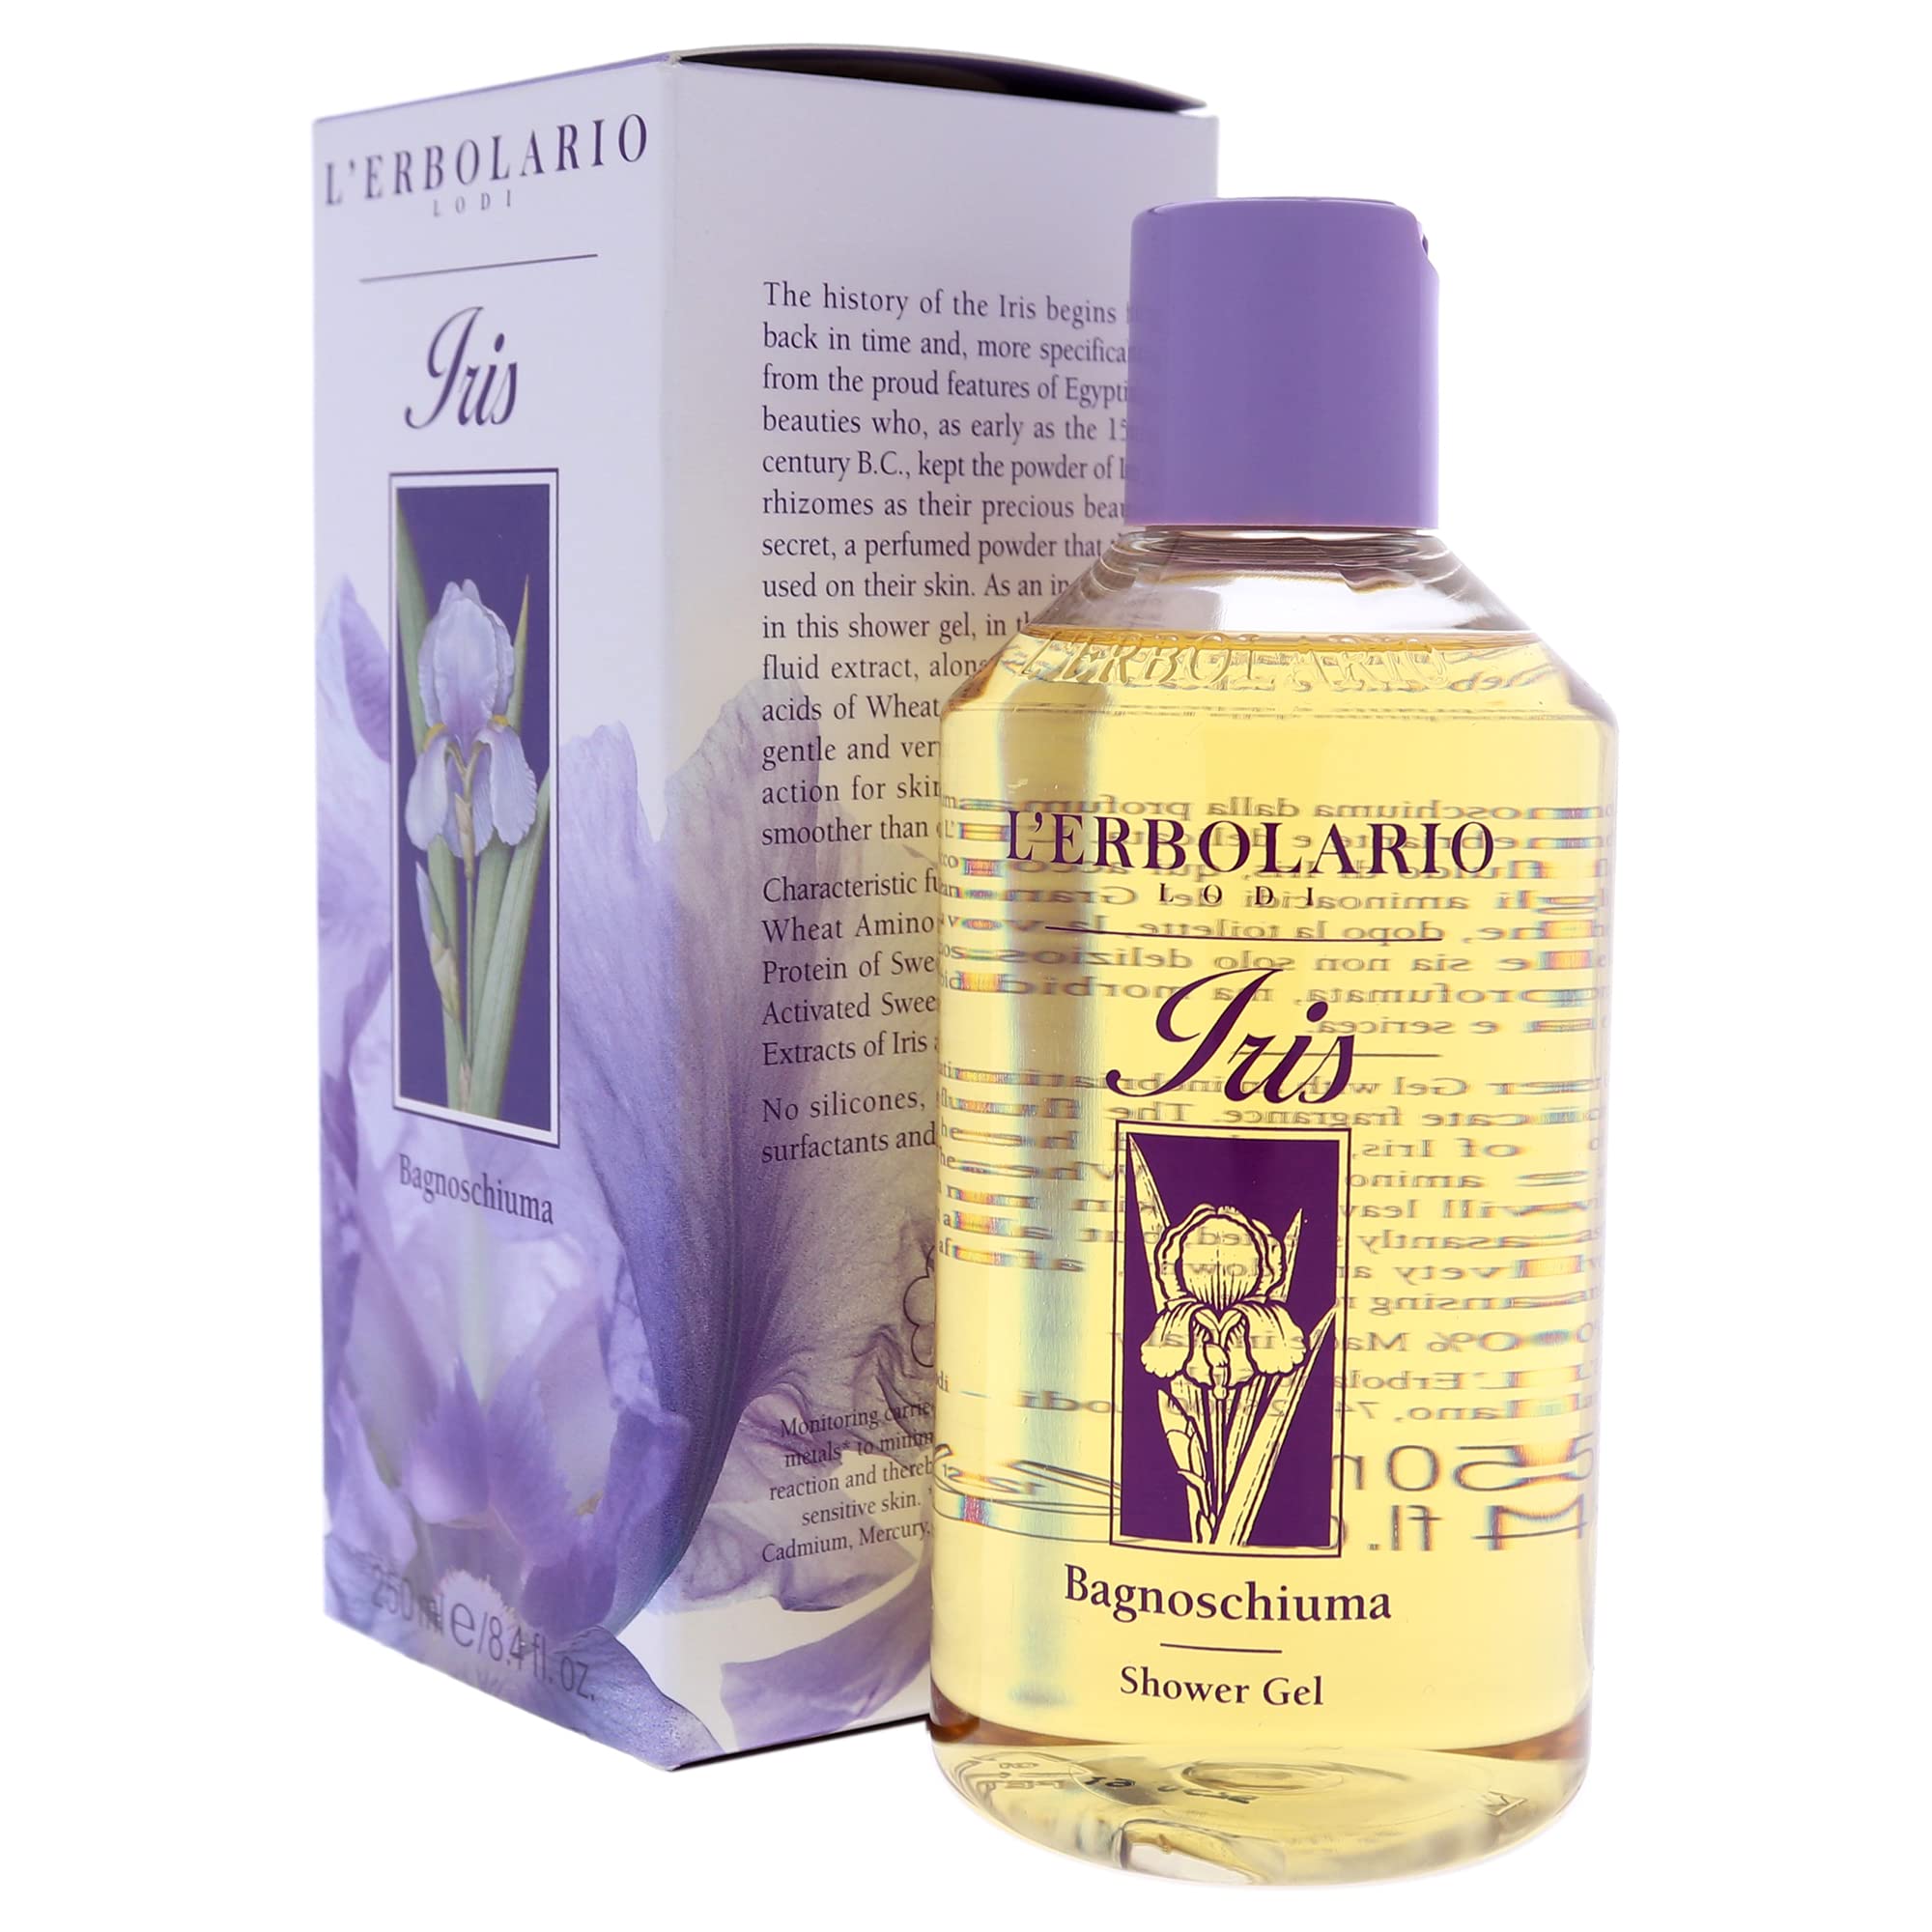 LErbolario Iris Shower Gel For Unisex 8.4 oz Shower Gels